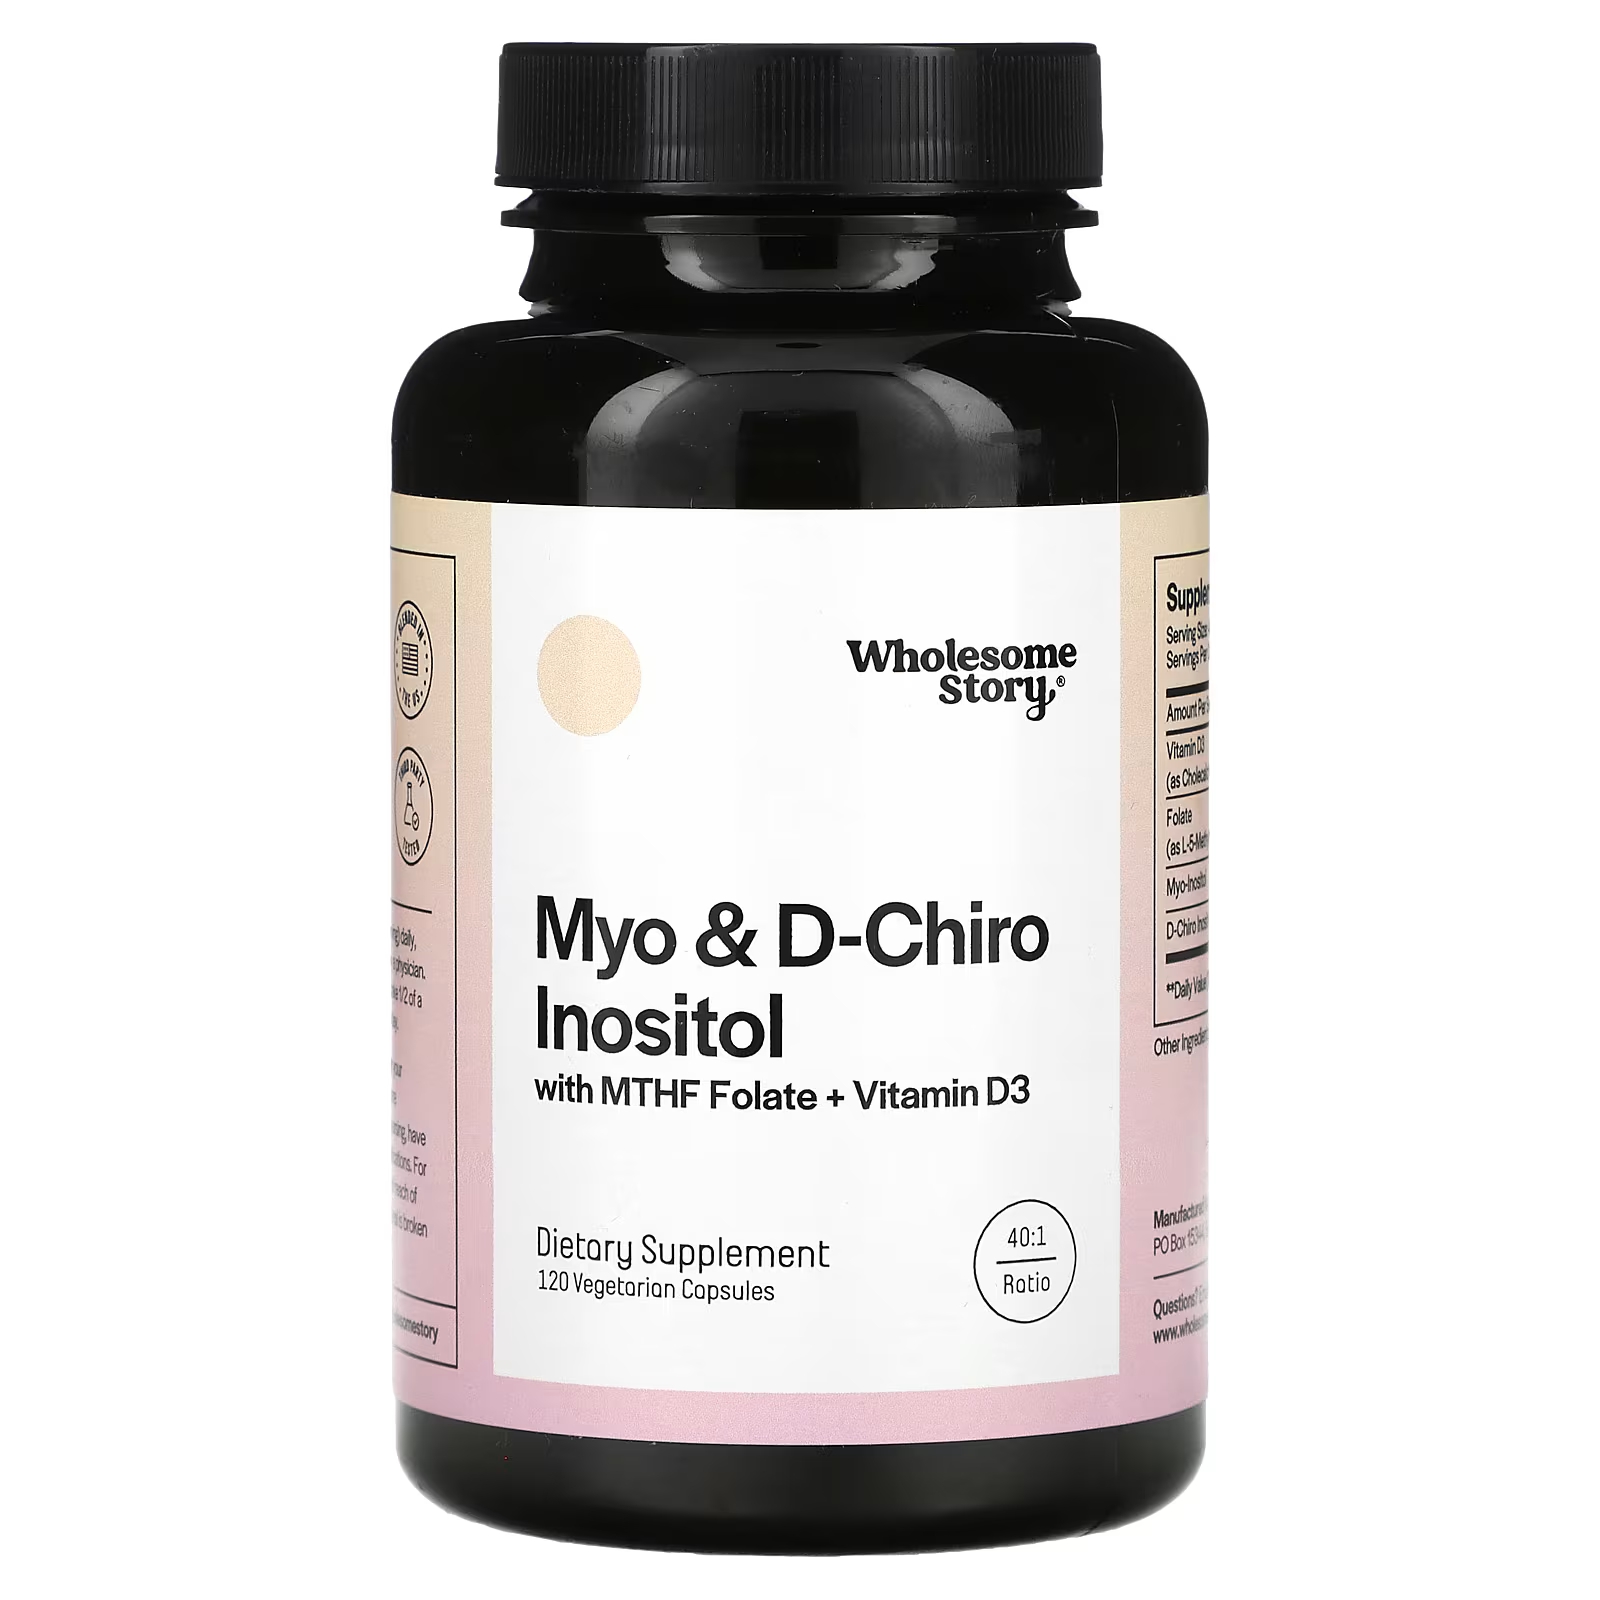 Wholesome Story Myo & D-Chiro Инозитол с MTHF, фолатом и витамином D3, 120 вегетарианских капсул